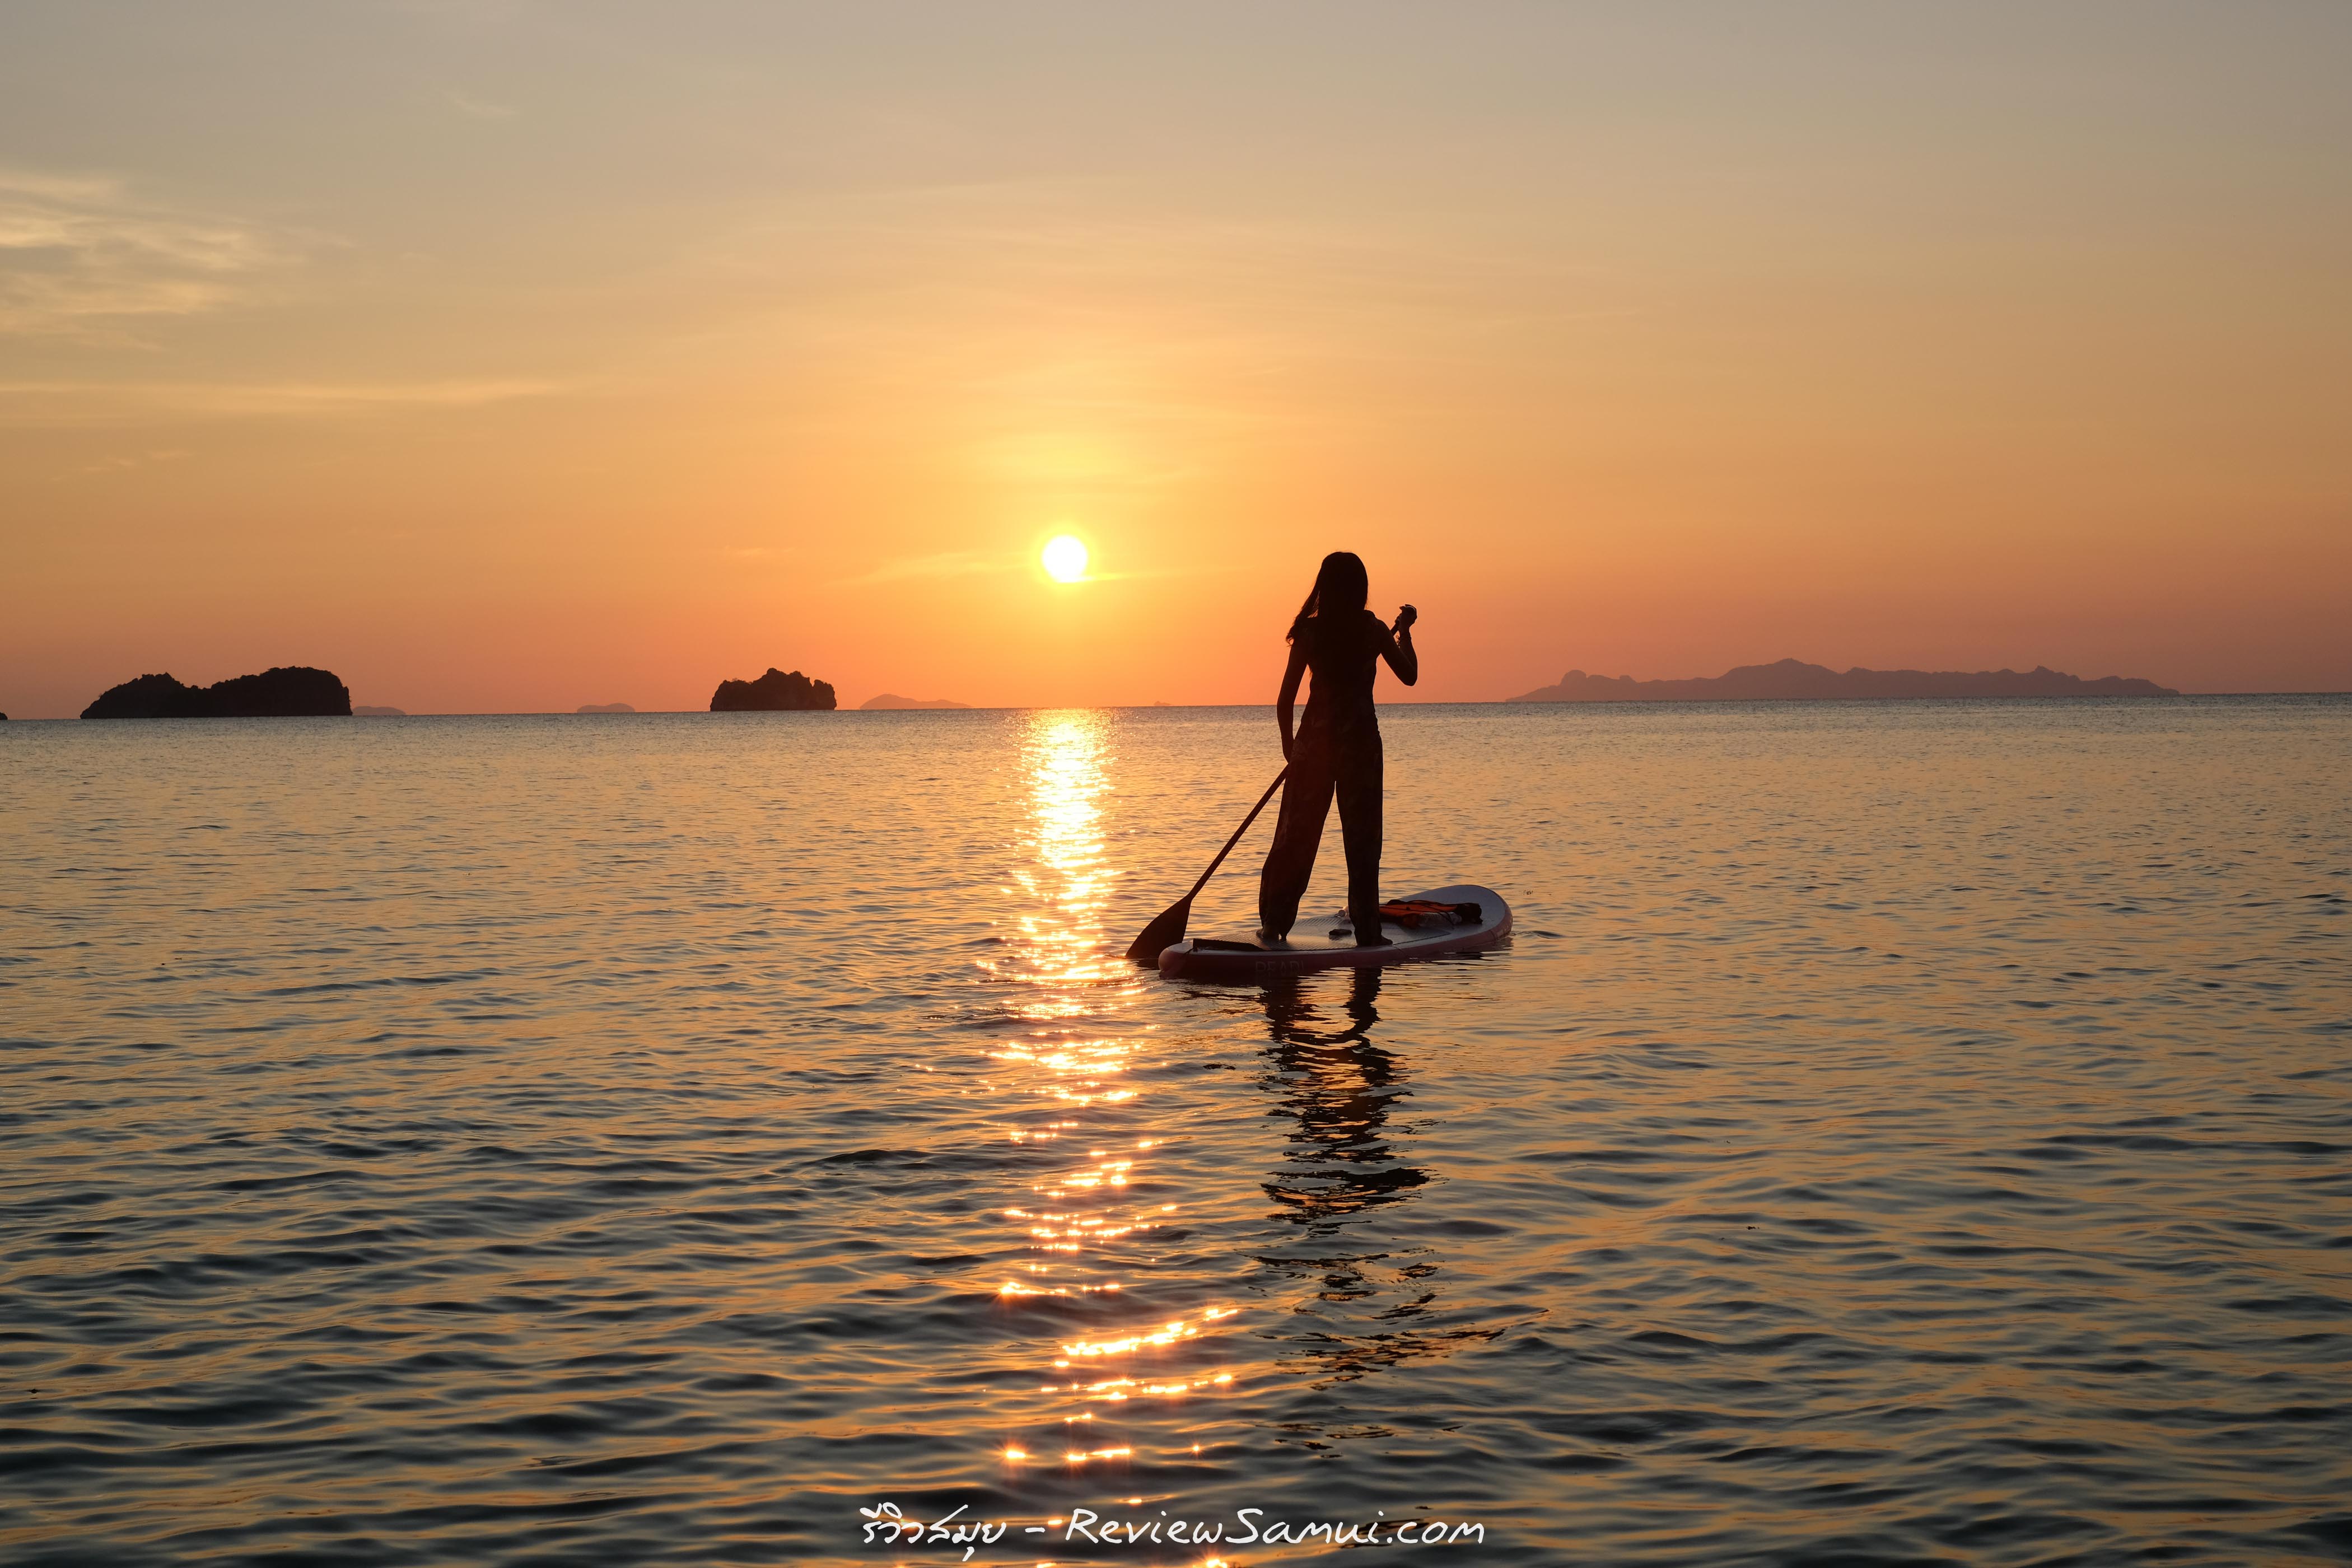 Paddle board พังกา รีวิวสมุย | Review samui